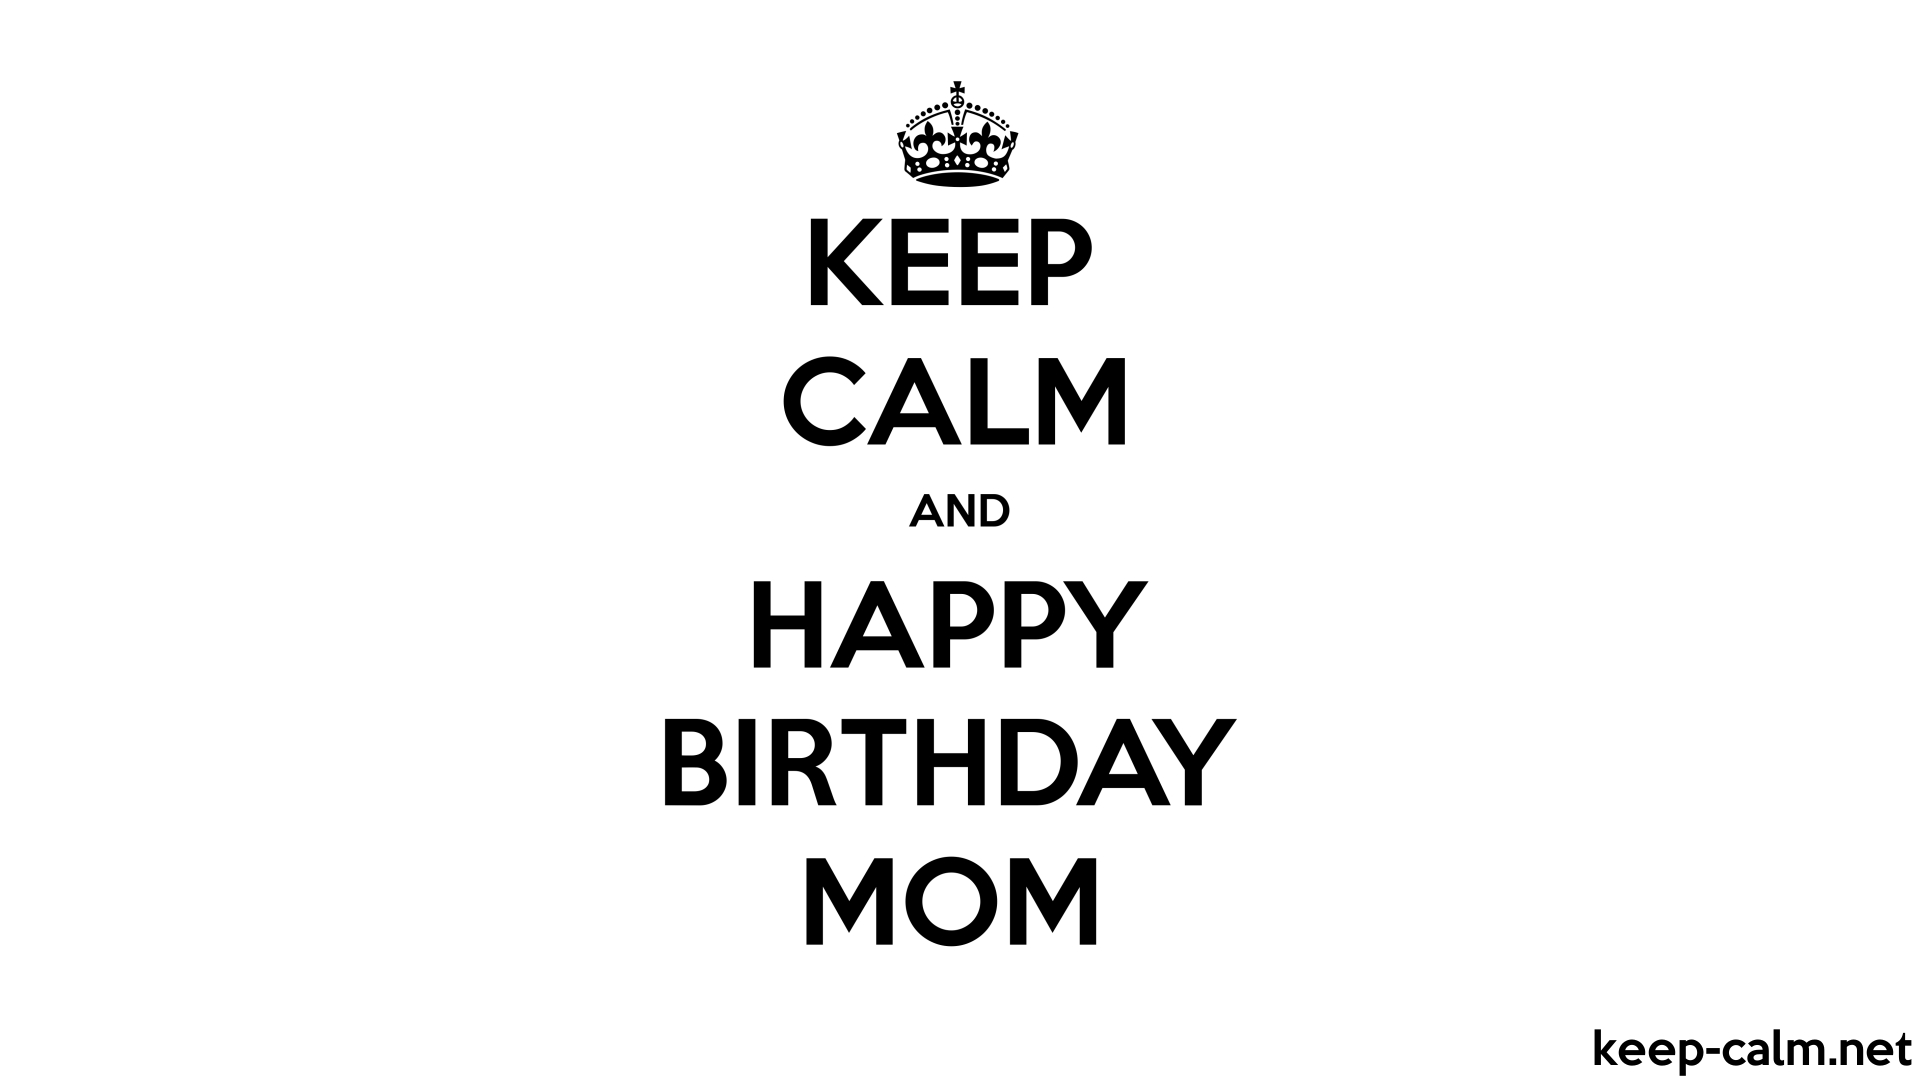 KEEP CALM AND HAPPY BIRTHDAY MOM